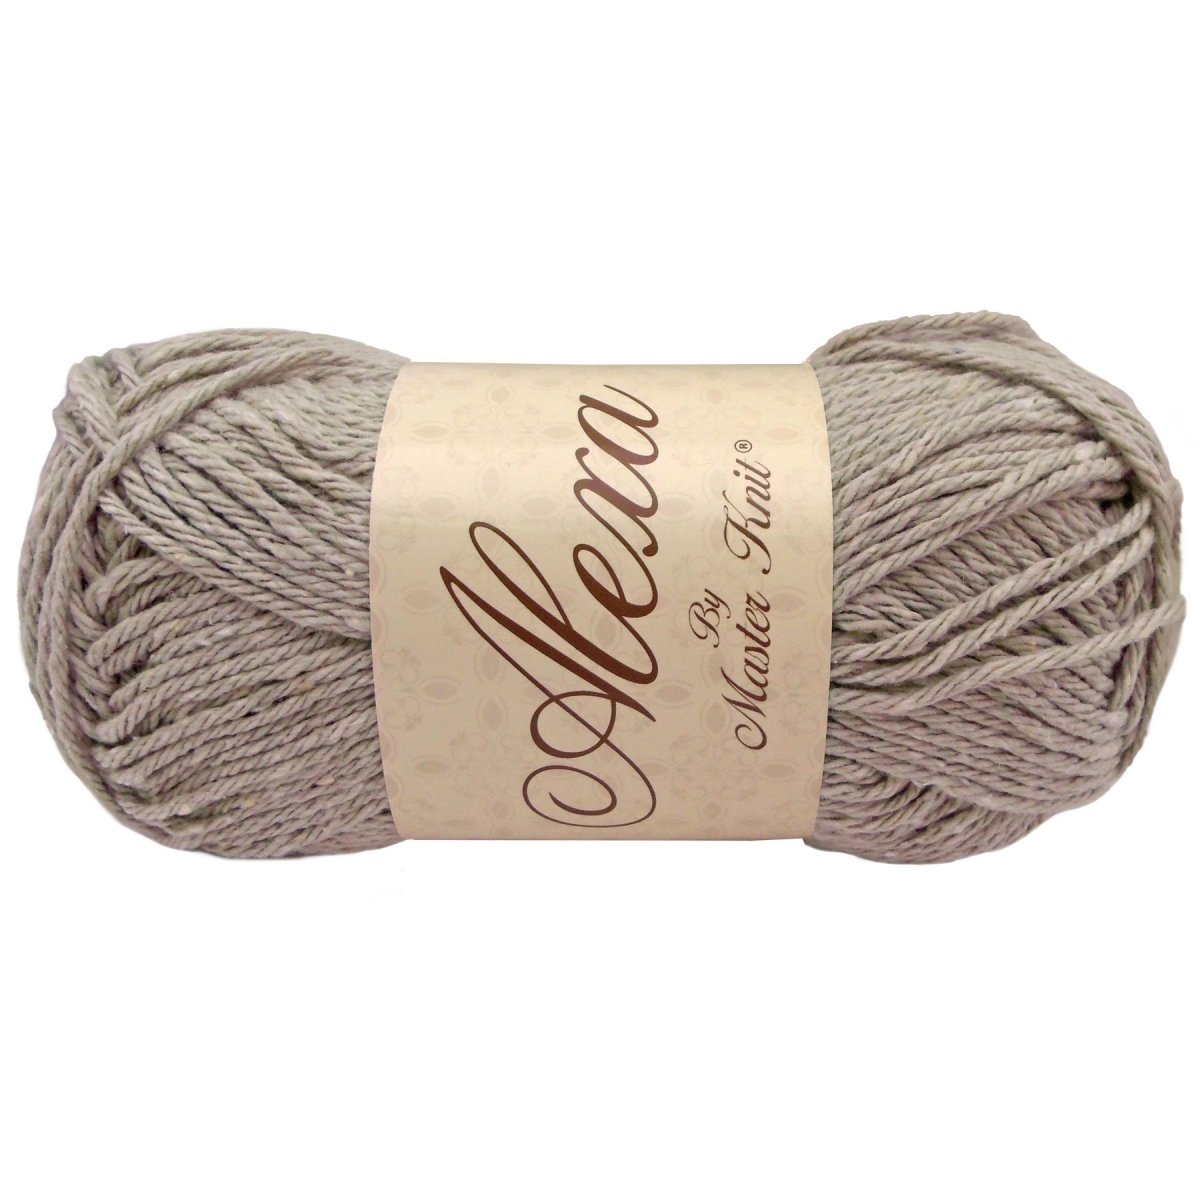 ALEXA - Crochetstores9340-123